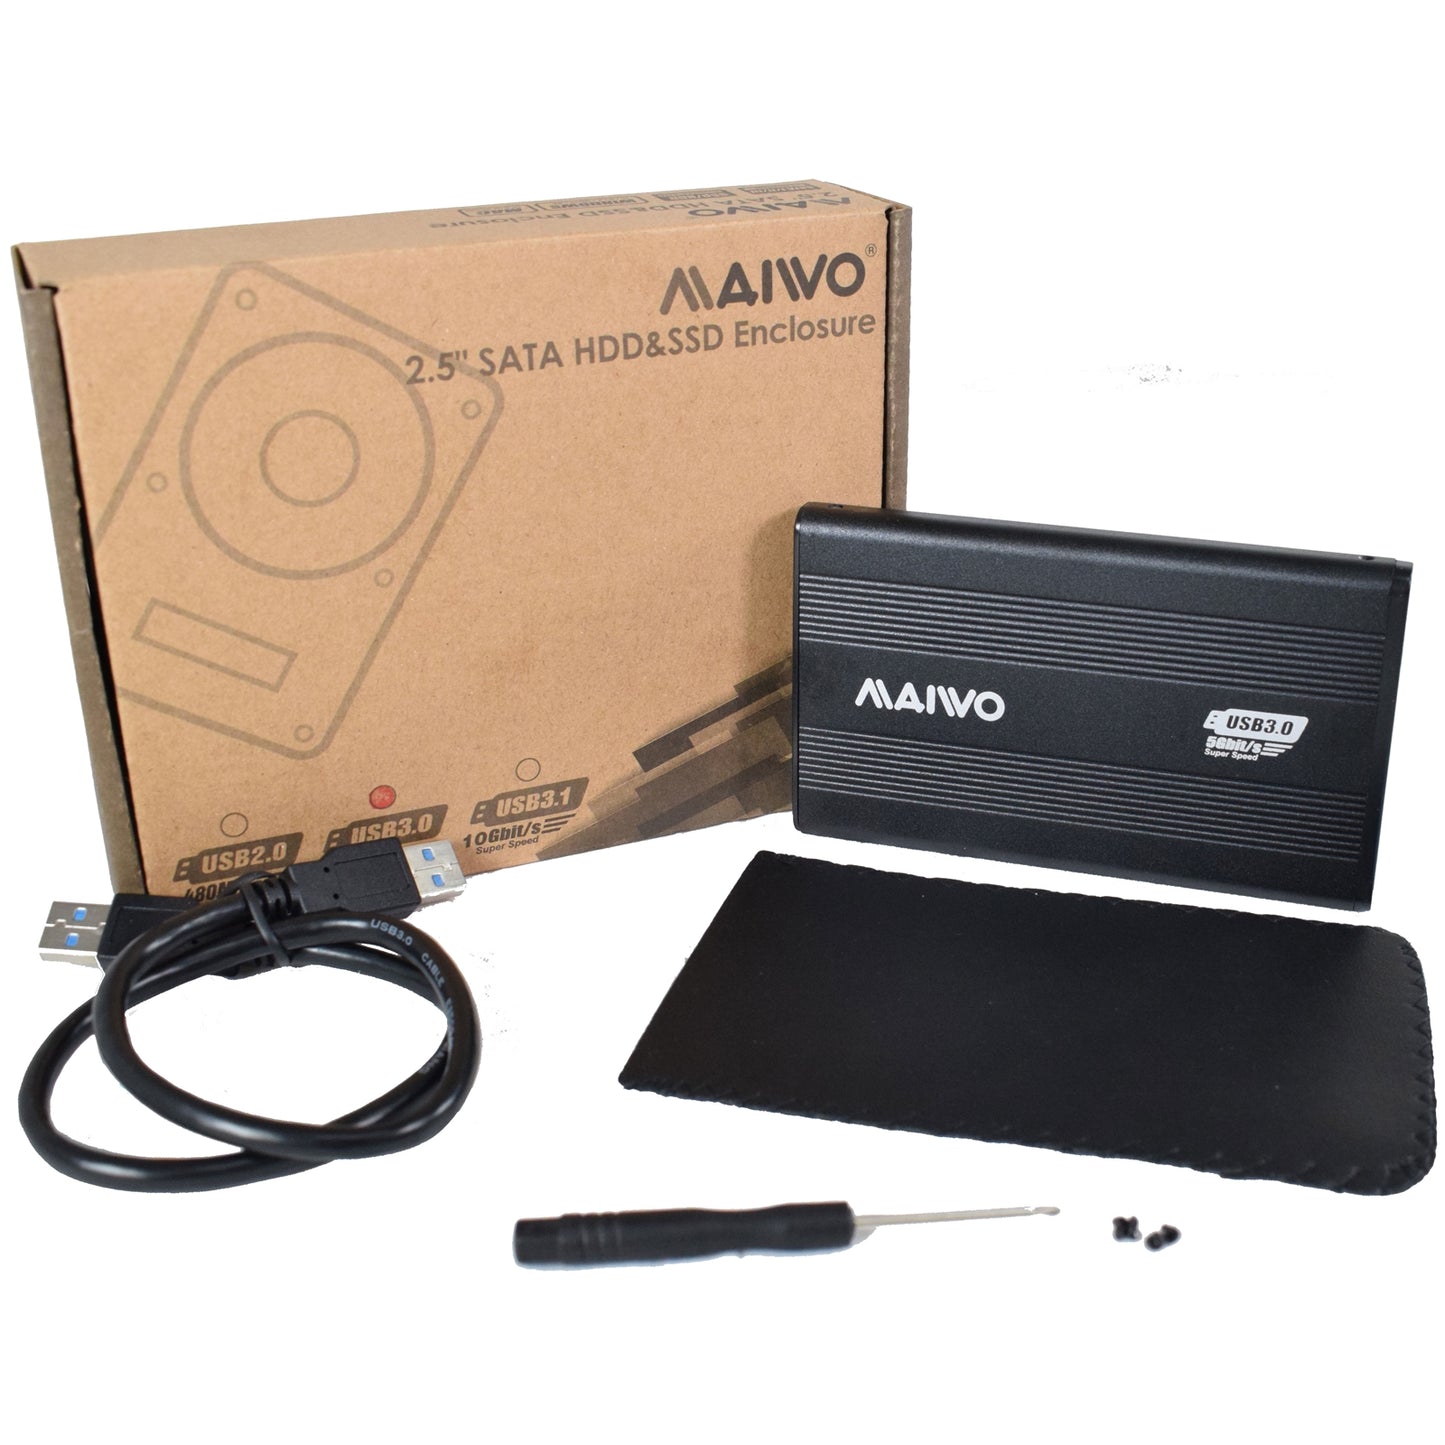 Maiwo 2.5 Inch External Hard Drive Enclosure, USB 3.0, 5Gbps, Black, For SATA III HDD/SSD